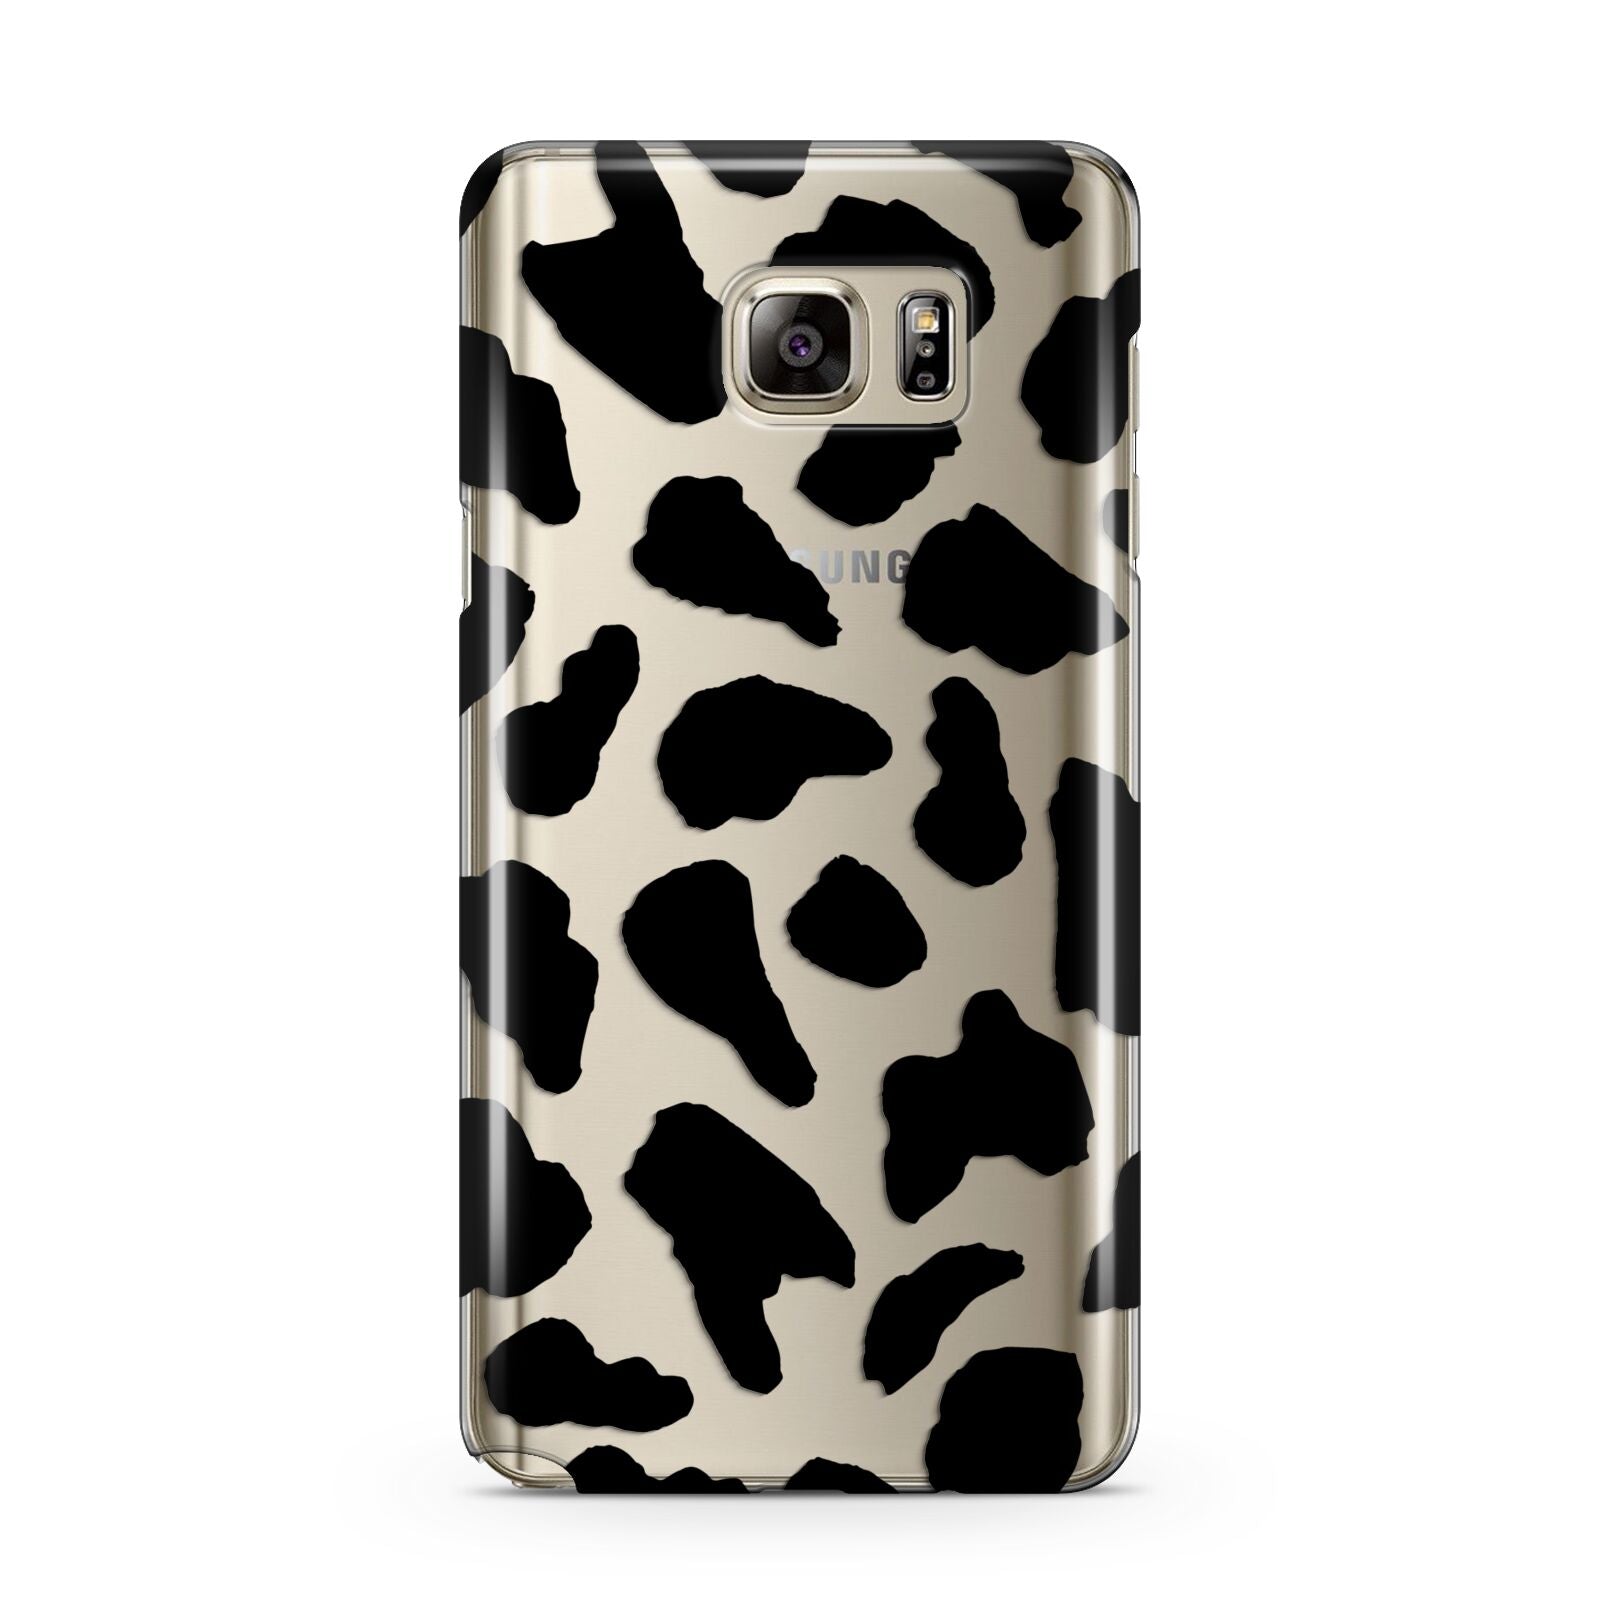 Black Cow Print Samsung Galaxy Note 5 Case